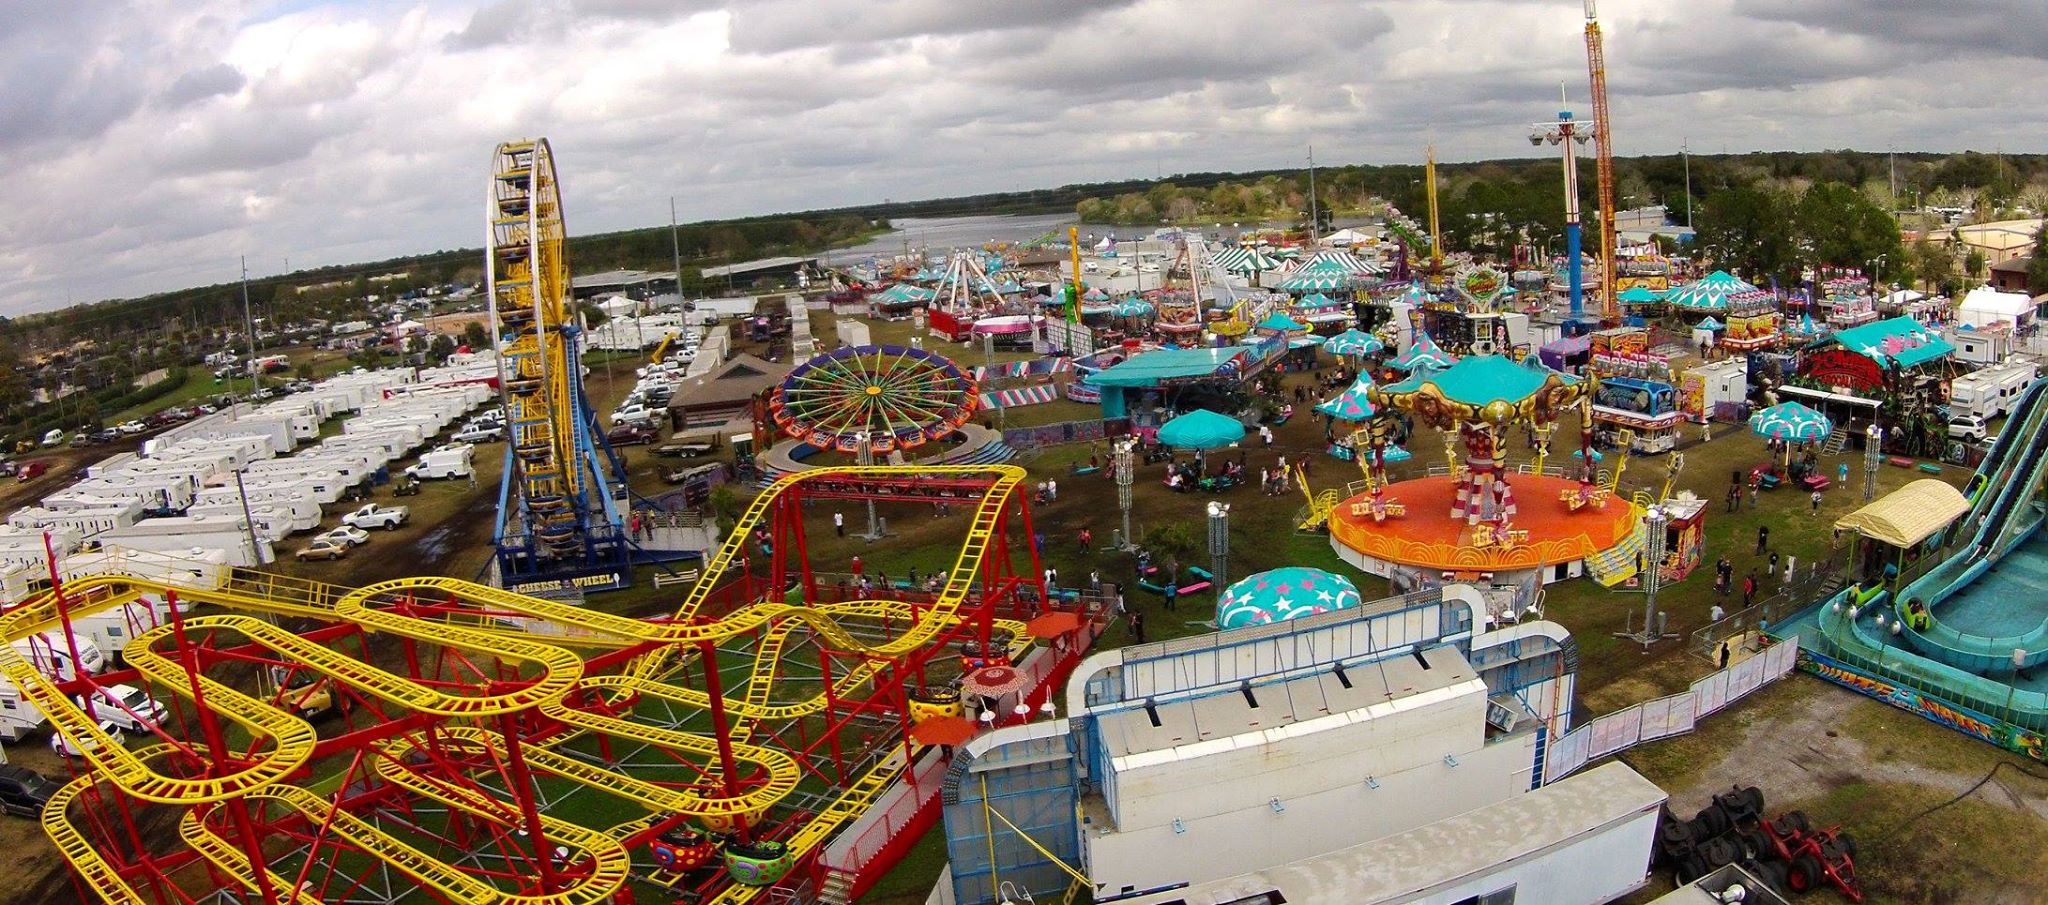 Central Florida Fair, Orlando FL, February 26th through March 8th 2015 Left at the Fork